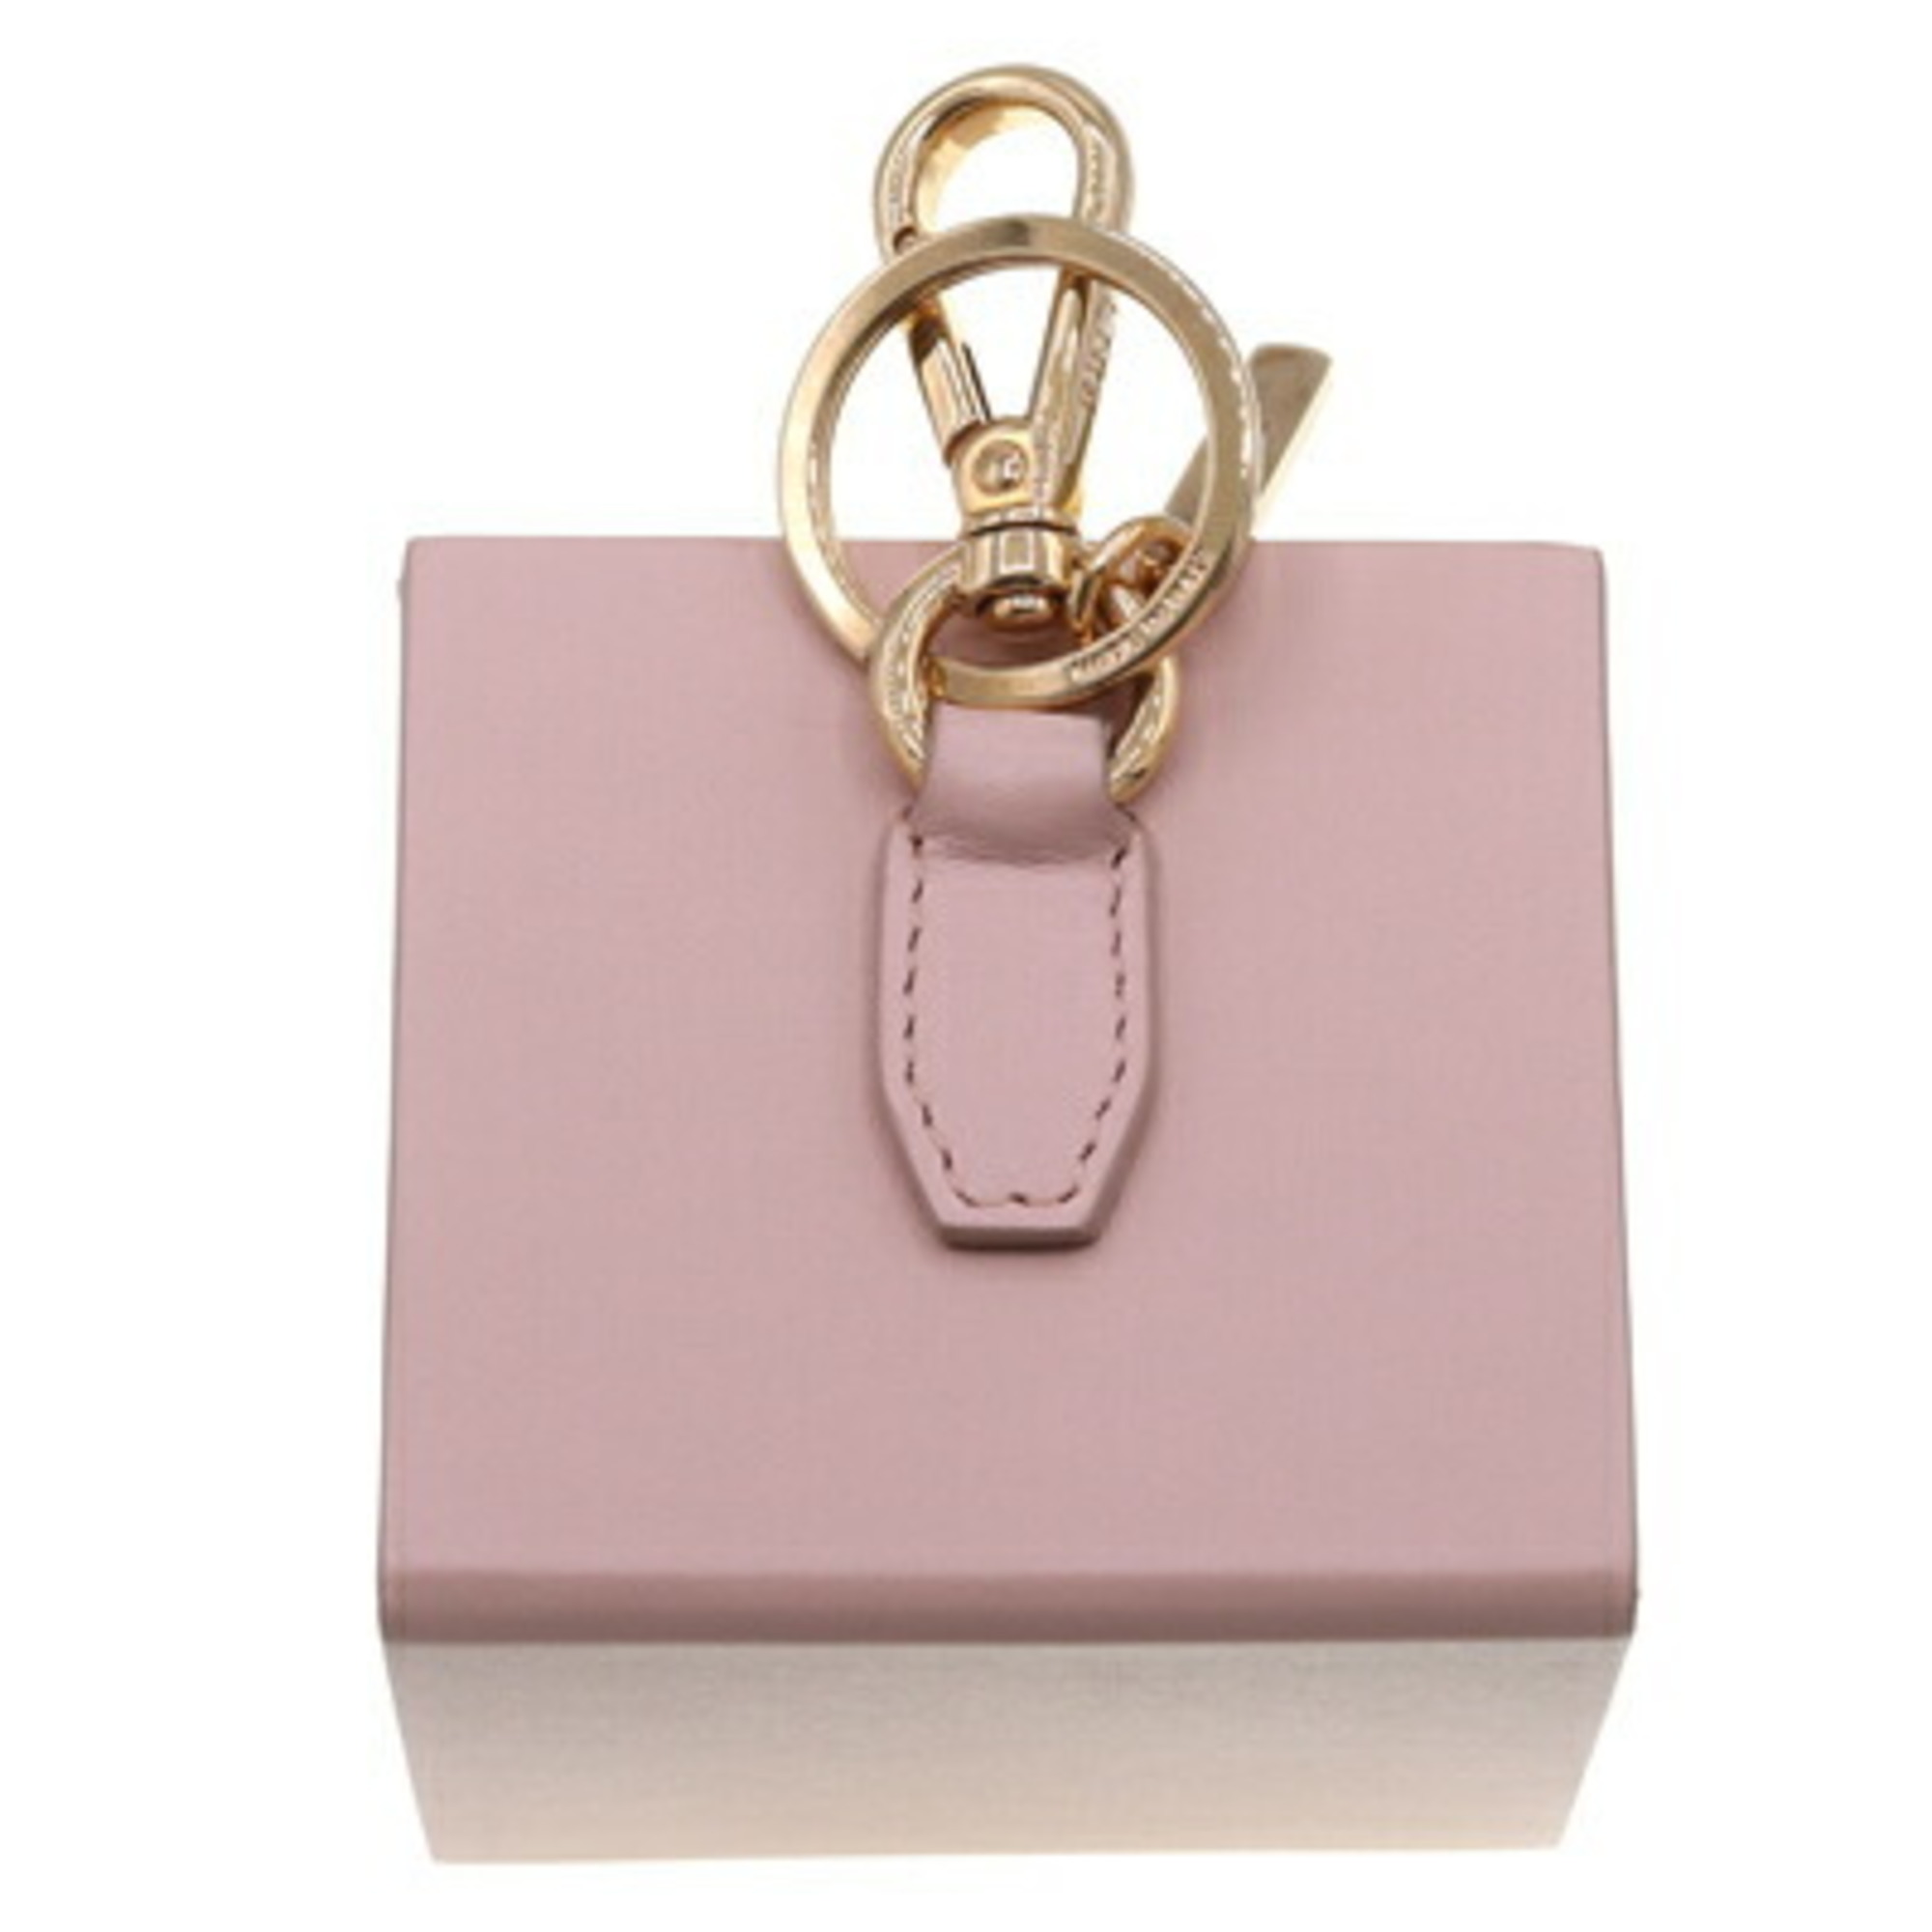 Fendi Keychain Box 7AR894 Light Pink Leather Keyring Bag Charm Ladies MINI BOX FENDI